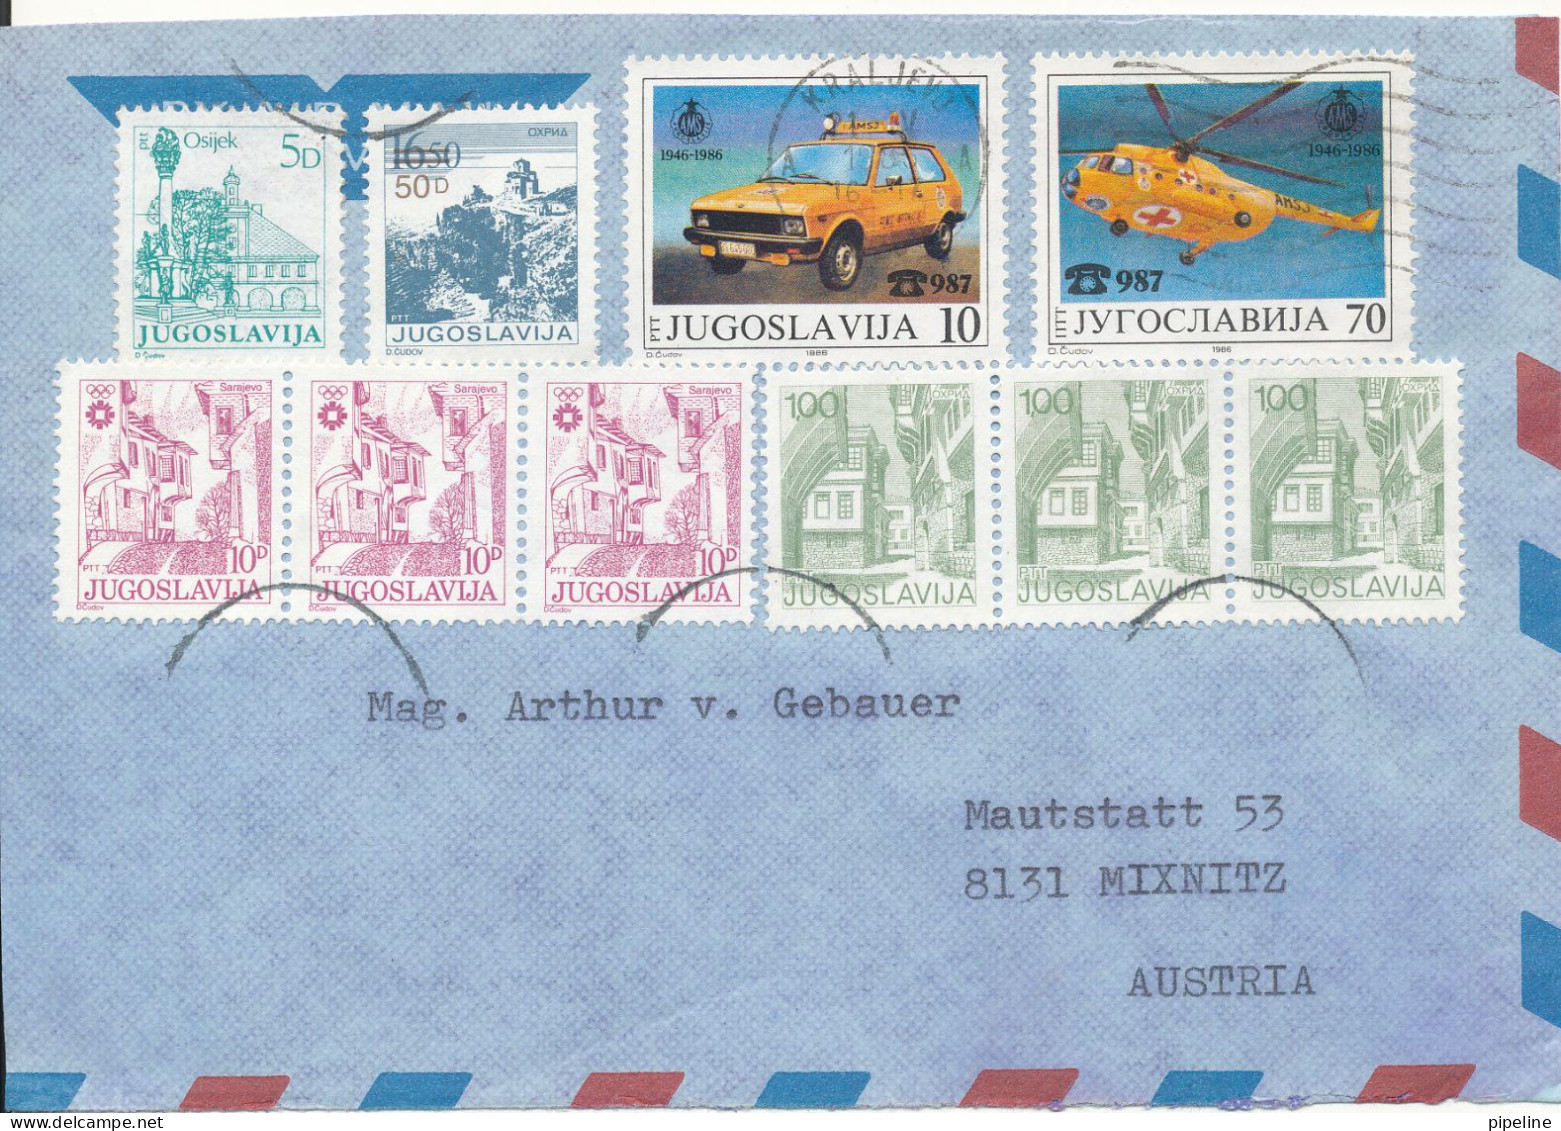 Yugoslavia Air Mail Cover Sent To Austria Kraljevo 21-5-1985 - Luftpost